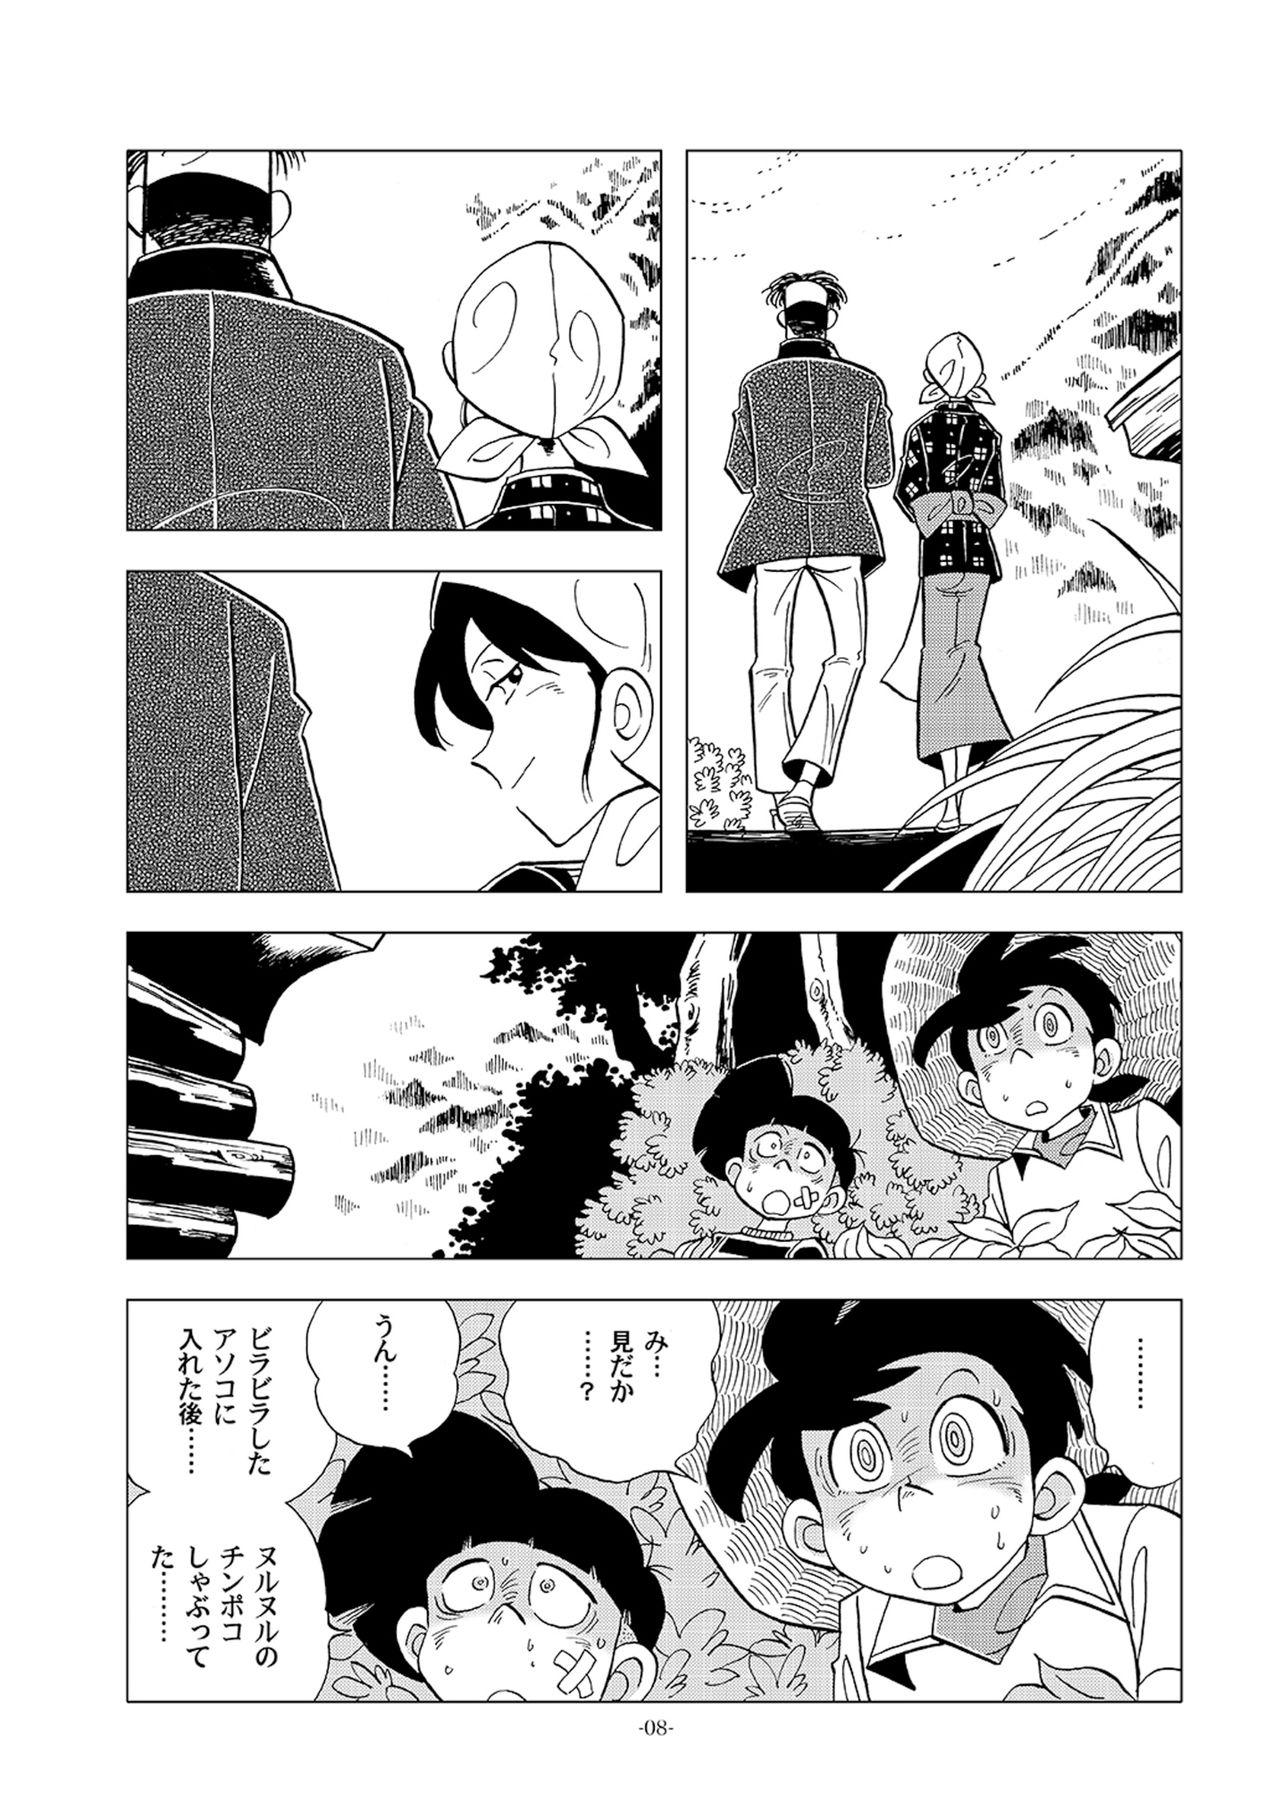 Leggings Dosu ke be nōson sai roku SP - Tsurikichi sanpei Family - Page 8